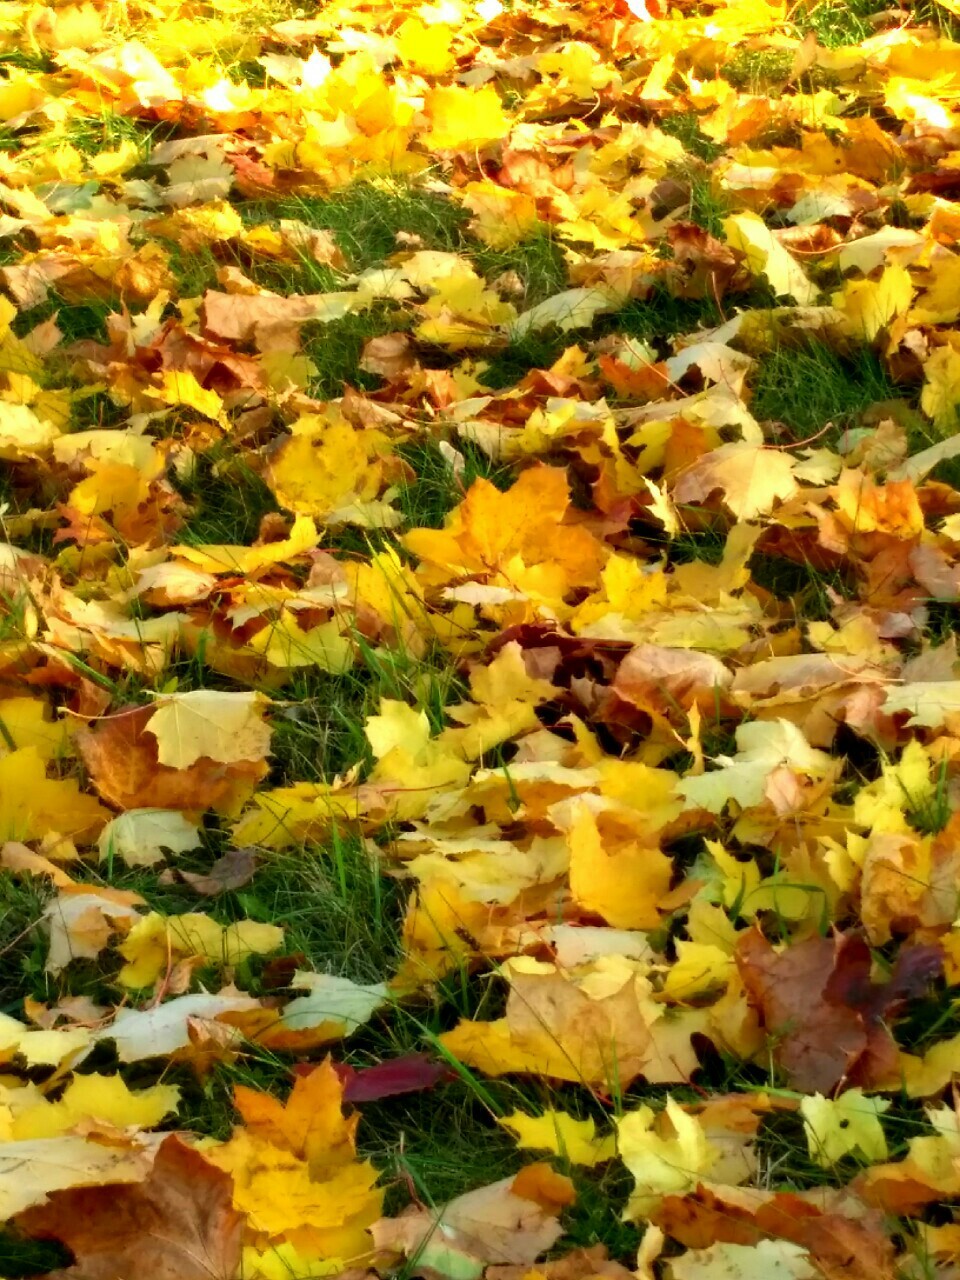 The foliage has fallen - Leaves, Autumn leaves, Autumn, The photo